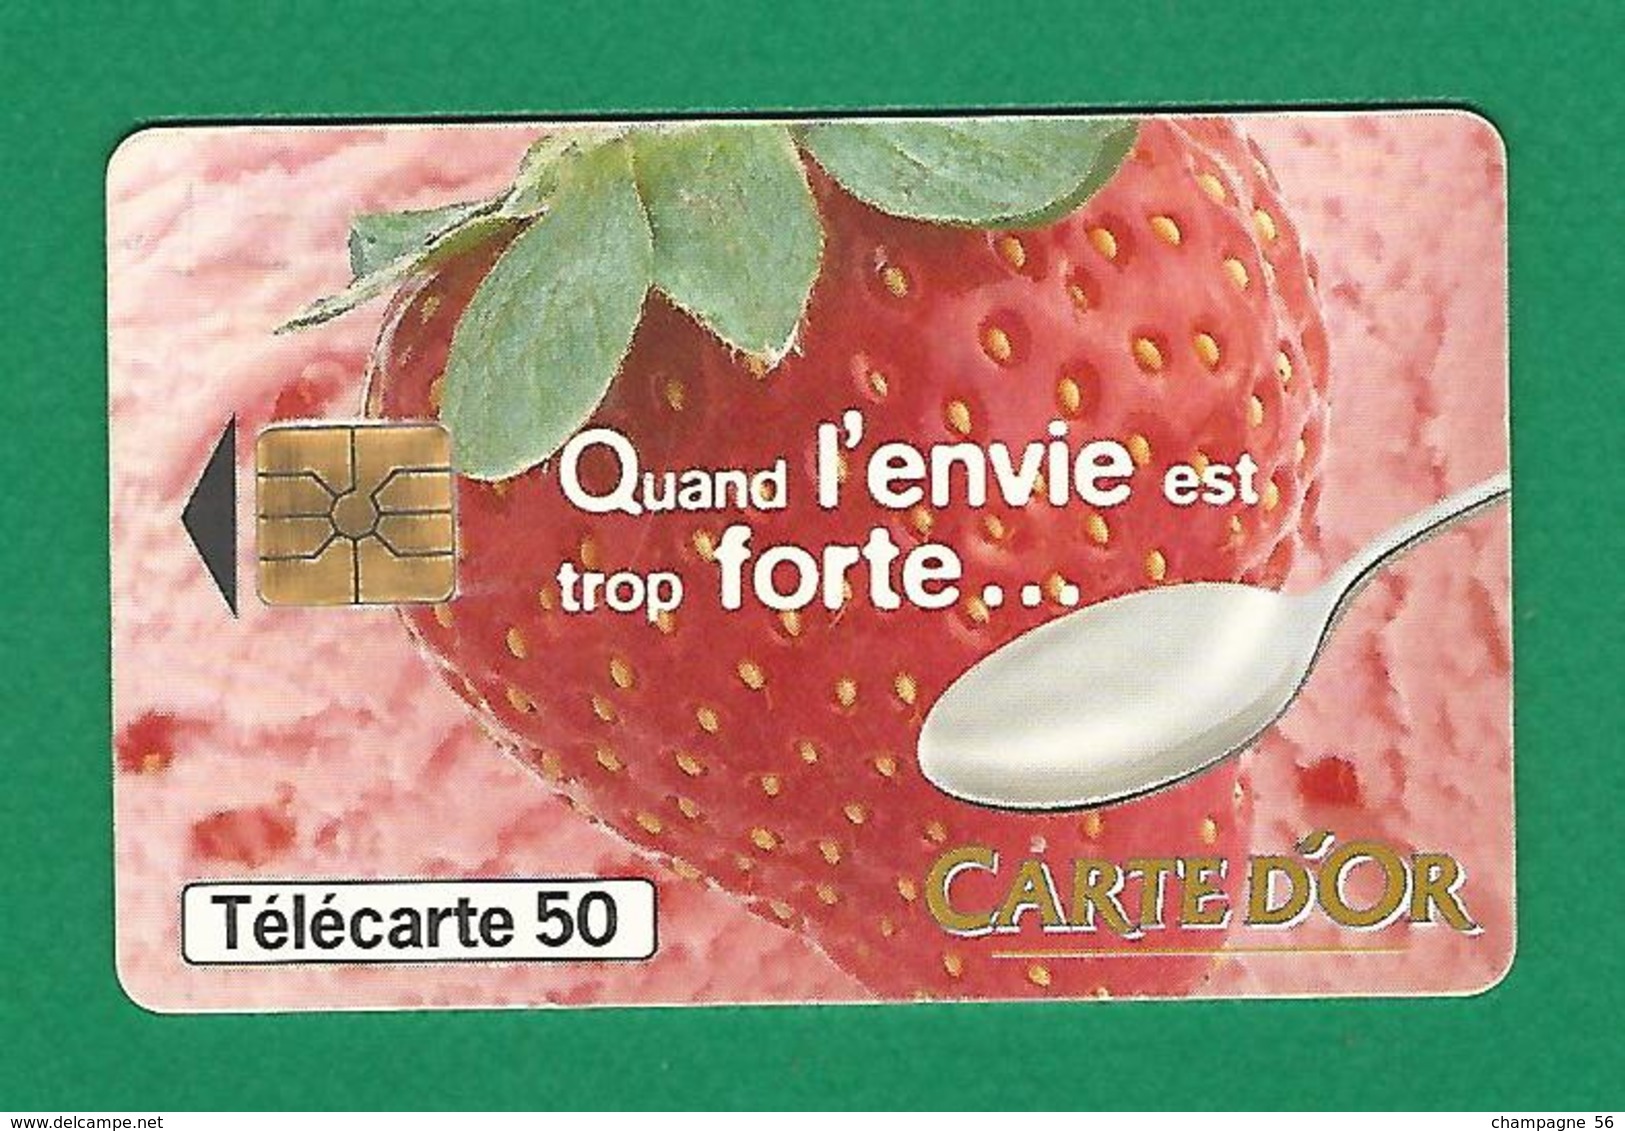 VARIÉTÉS 05 / 1997  CARTE D'OR   PUCE GEM1A   50 UNITÉS - Errors And Oddities